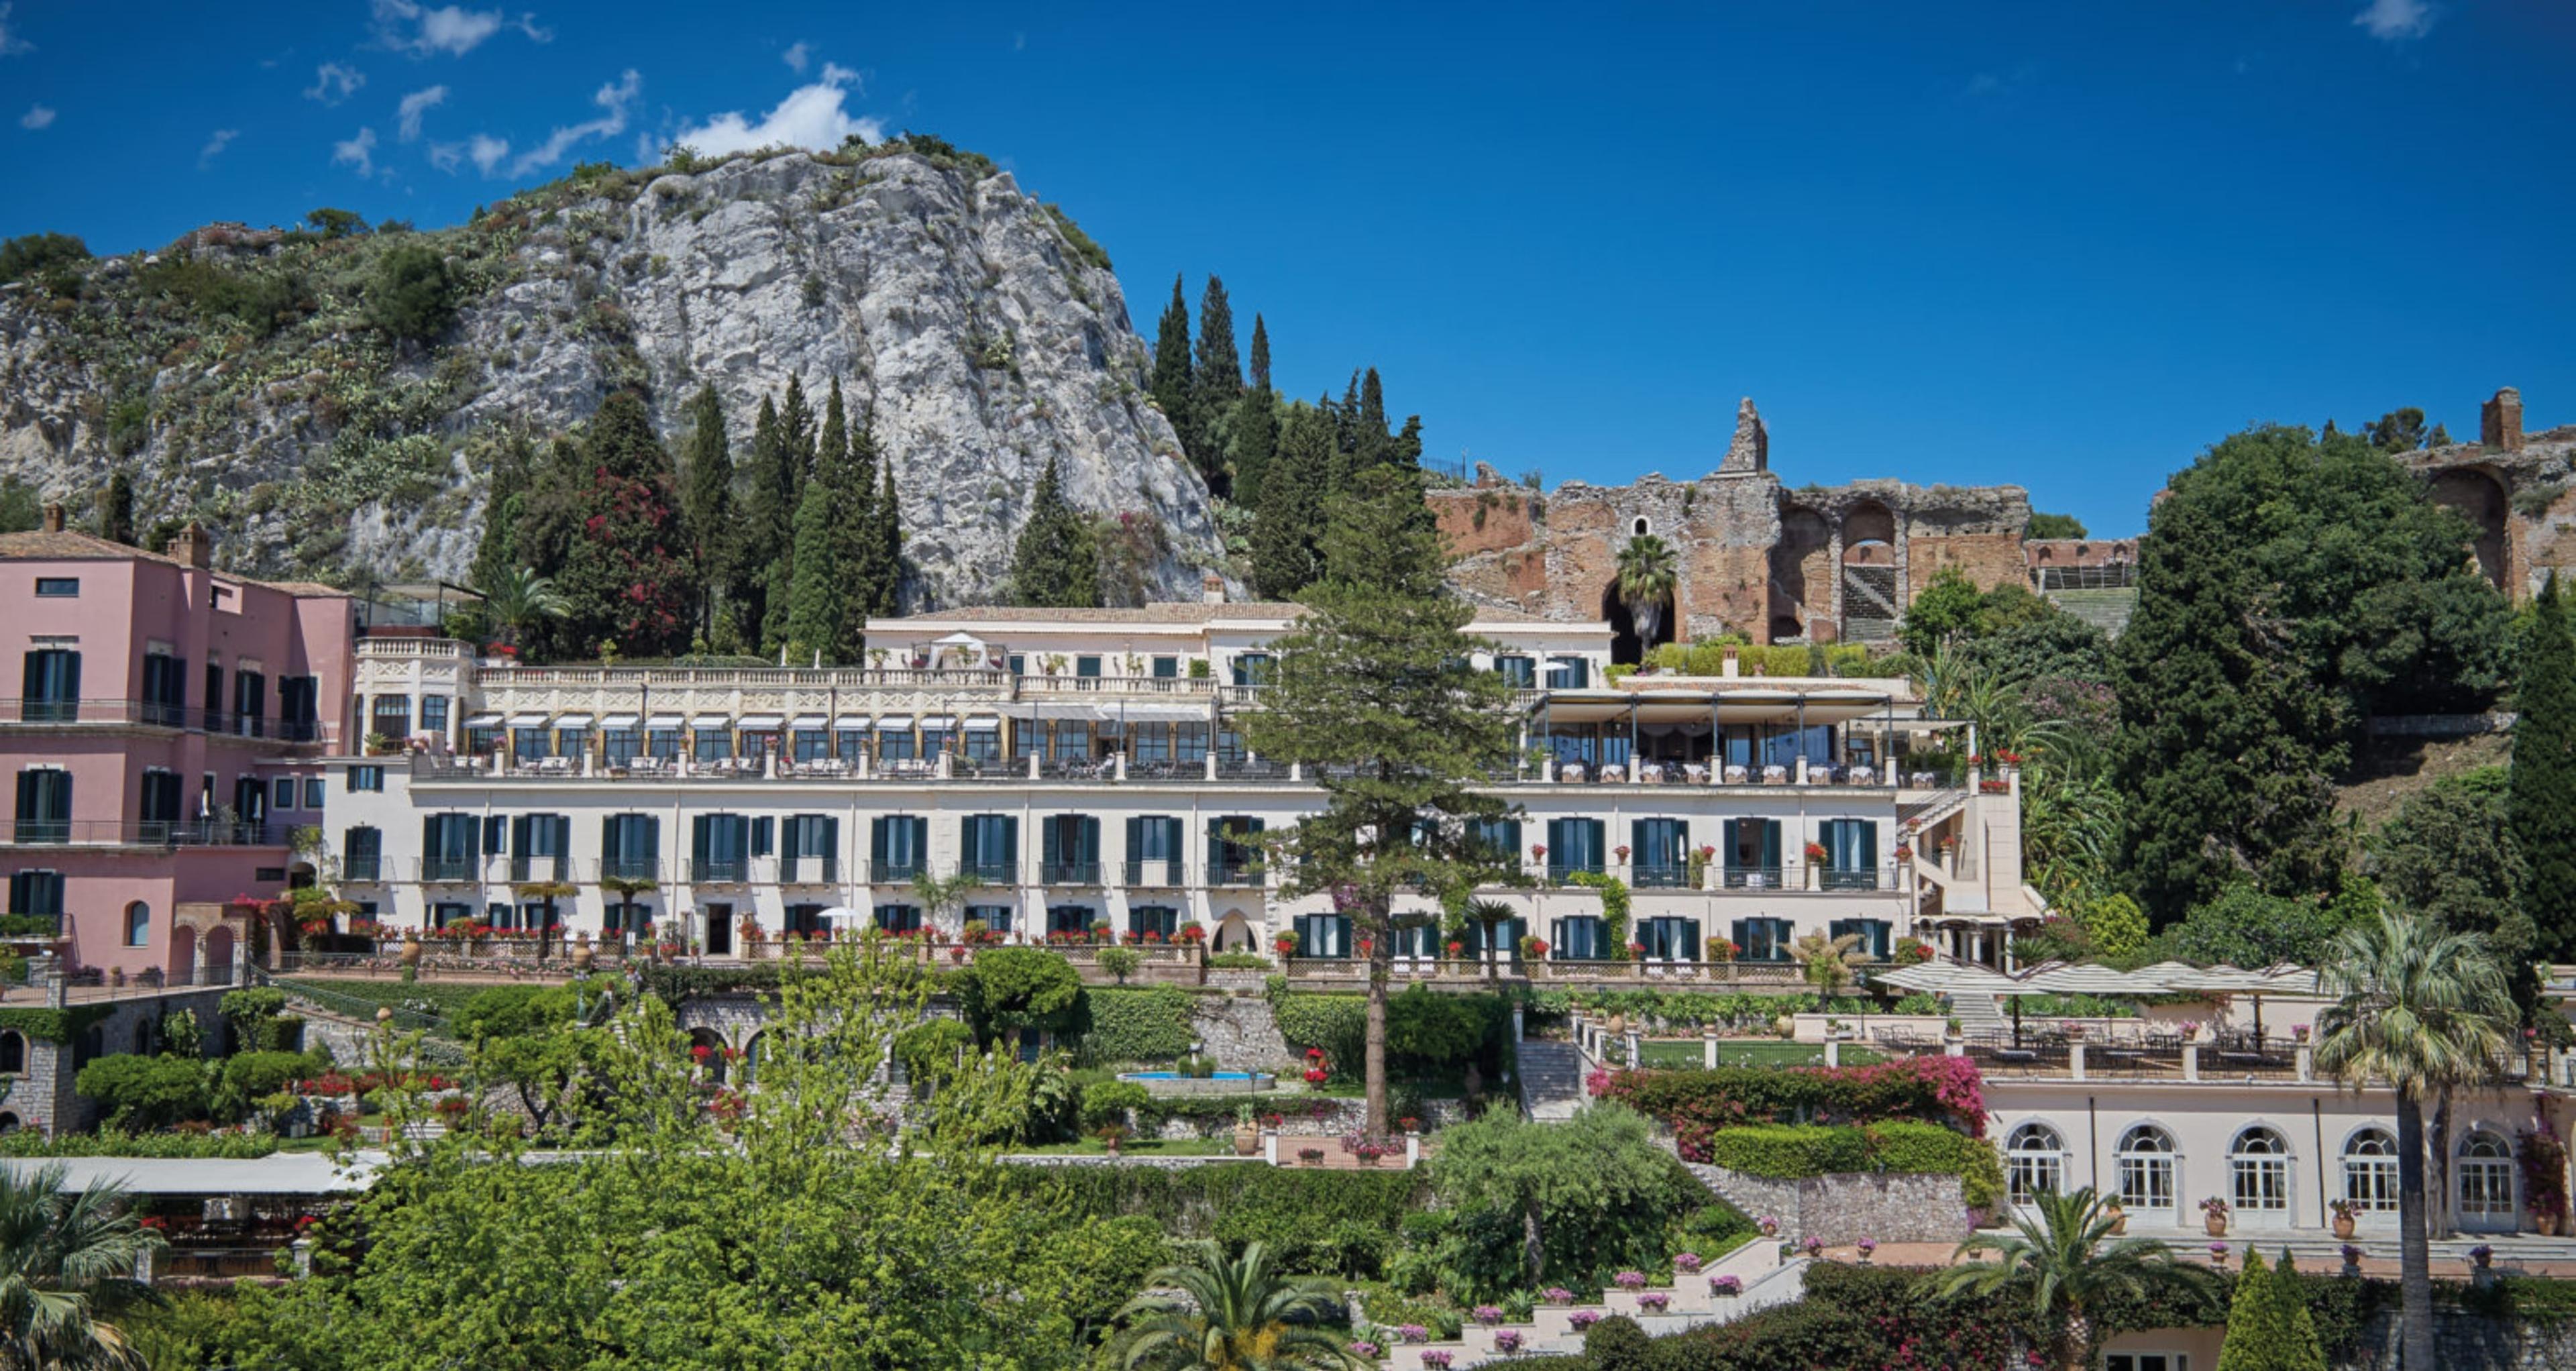 Grand Hotel Timeo, A Belmond Hotel - Taormina, Sicily Island, Italy